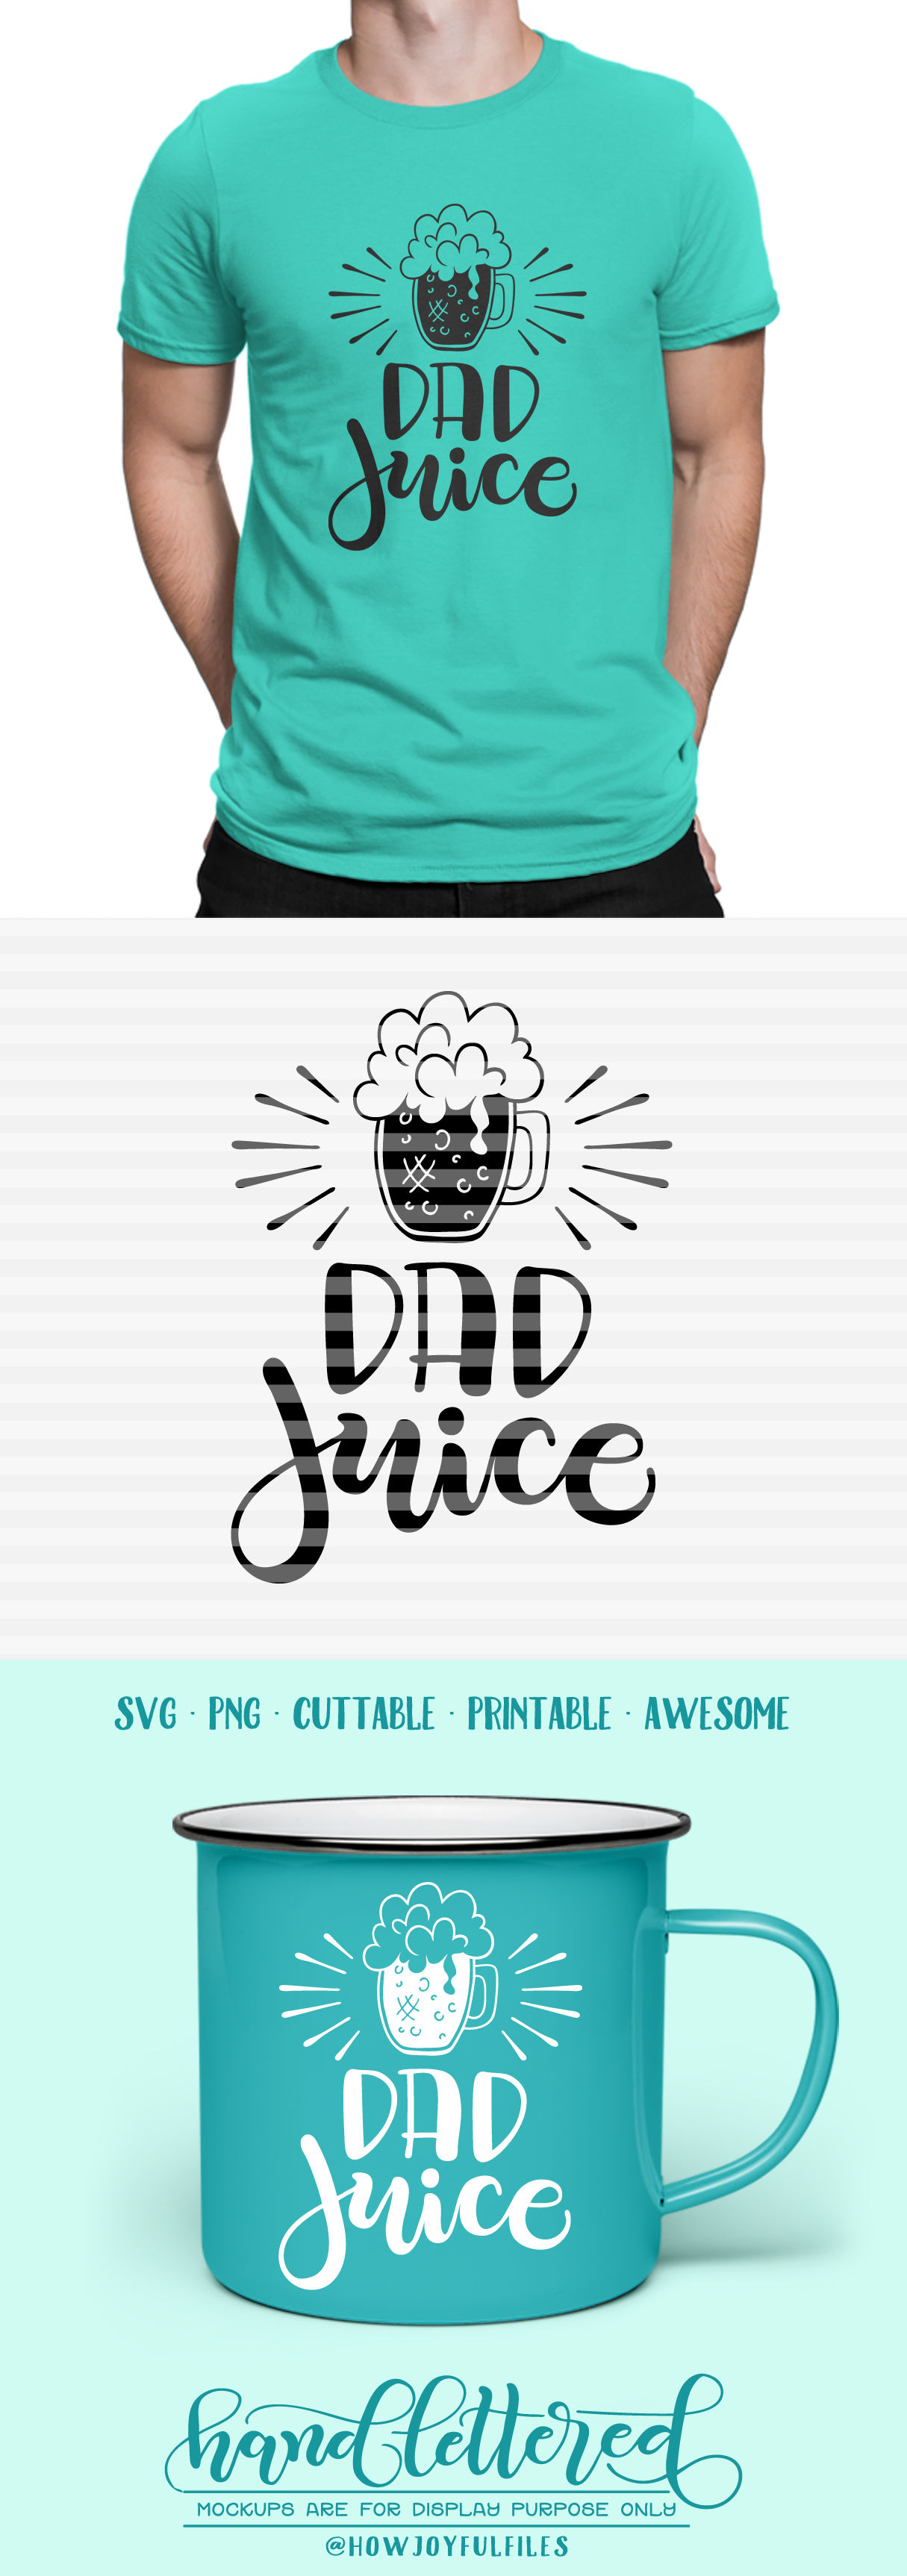 Download Dad juice - beer - SVG - DXF - PDF file - hand drawn lettered cut file By HowJoyful Files ...